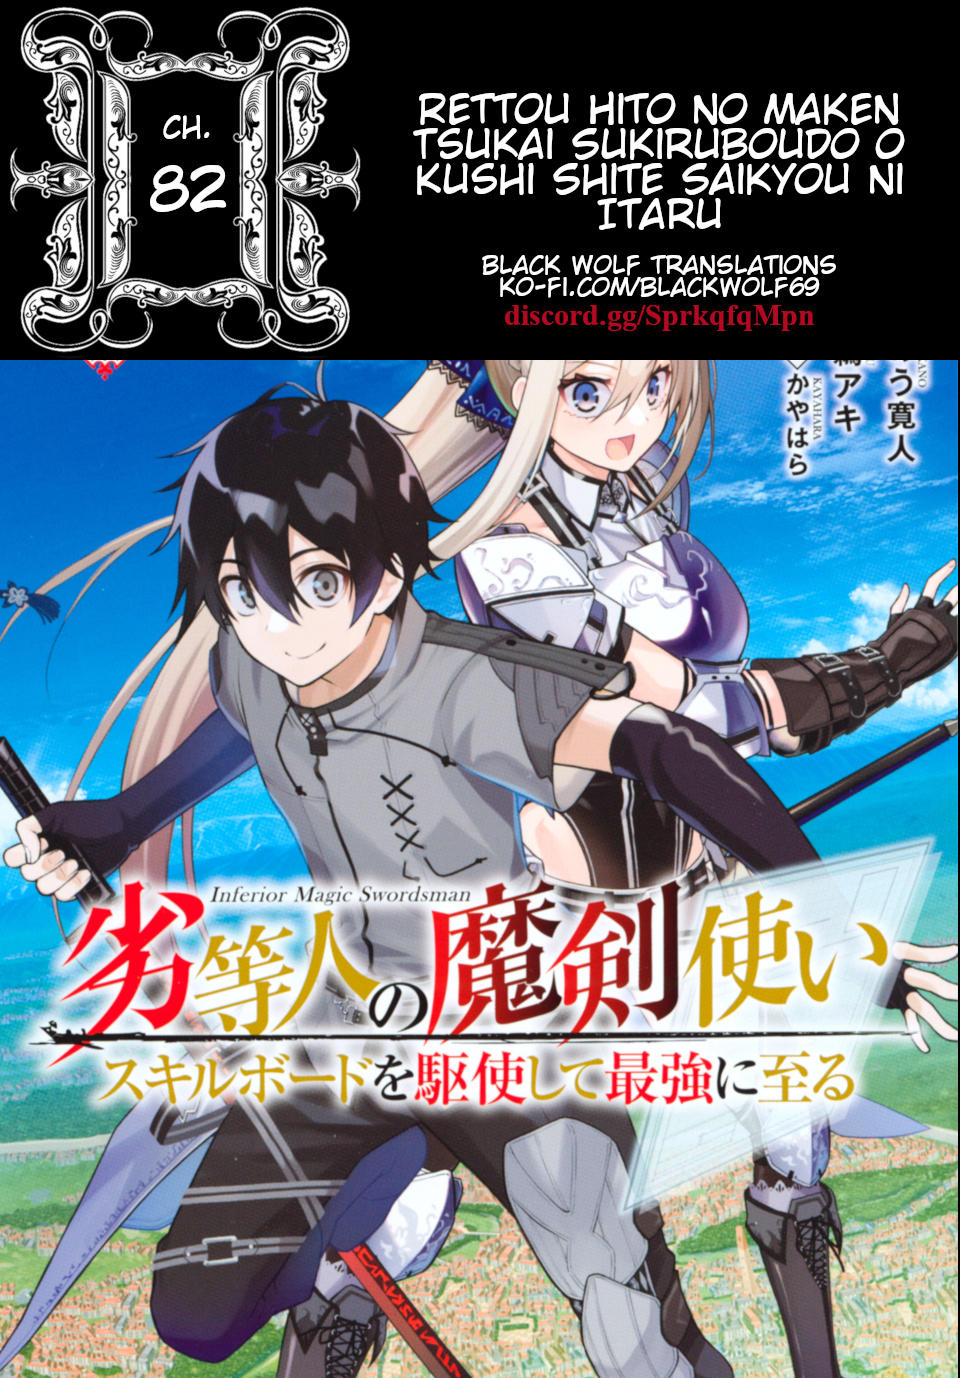 Read Knights Magic Chapter 82 - MangaFreak